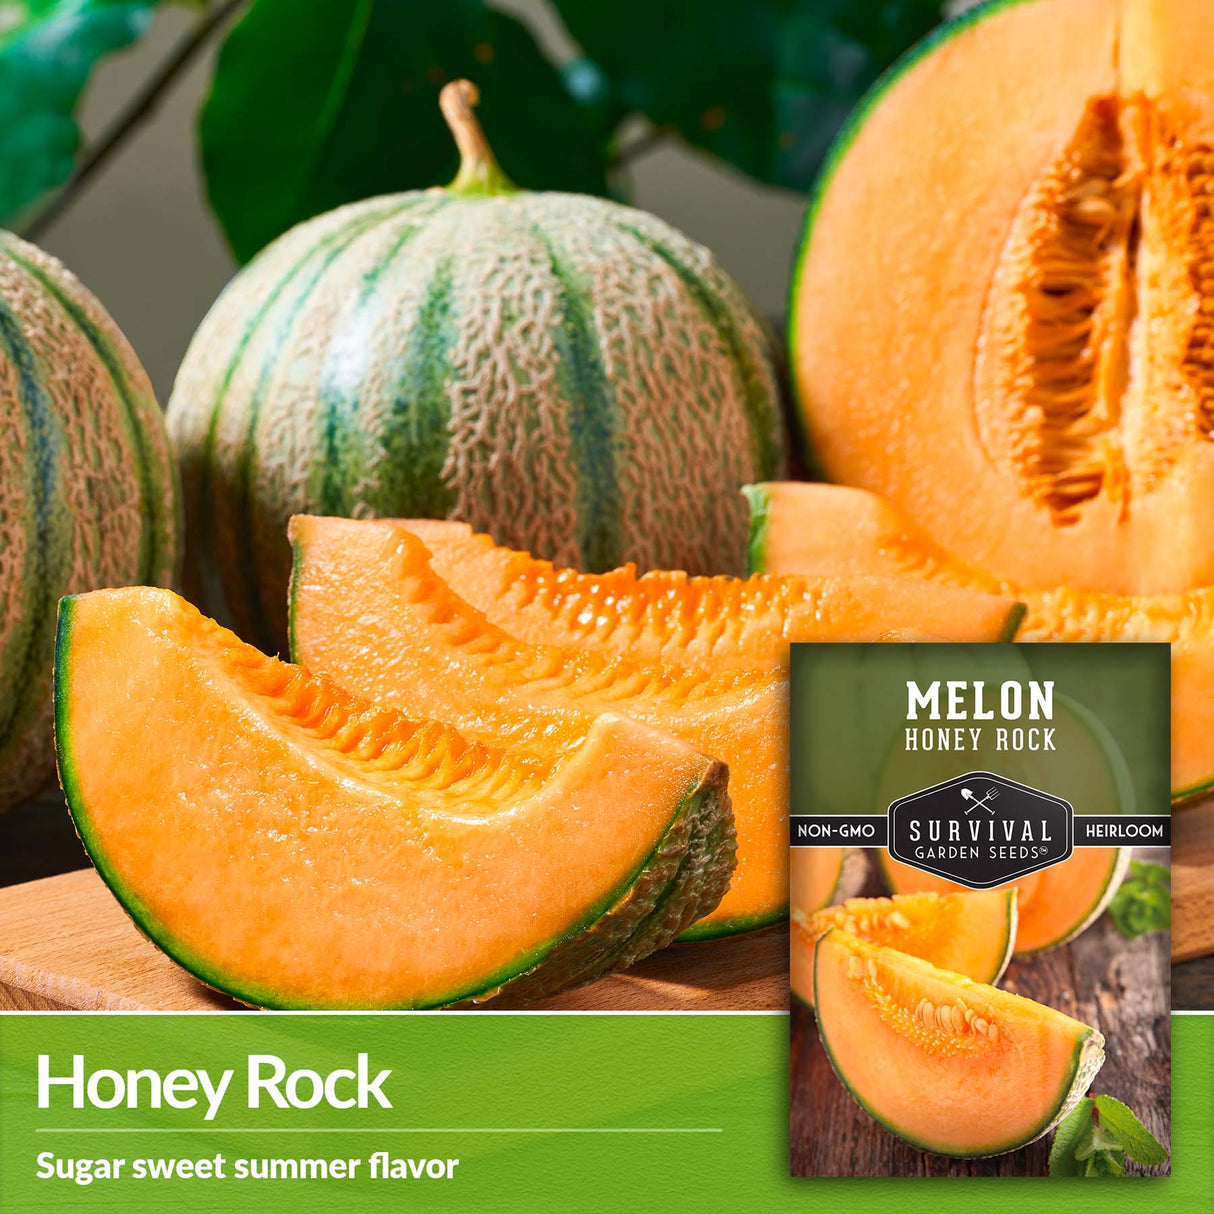 Honey Rock Melon has a sugar sweet summer flavor